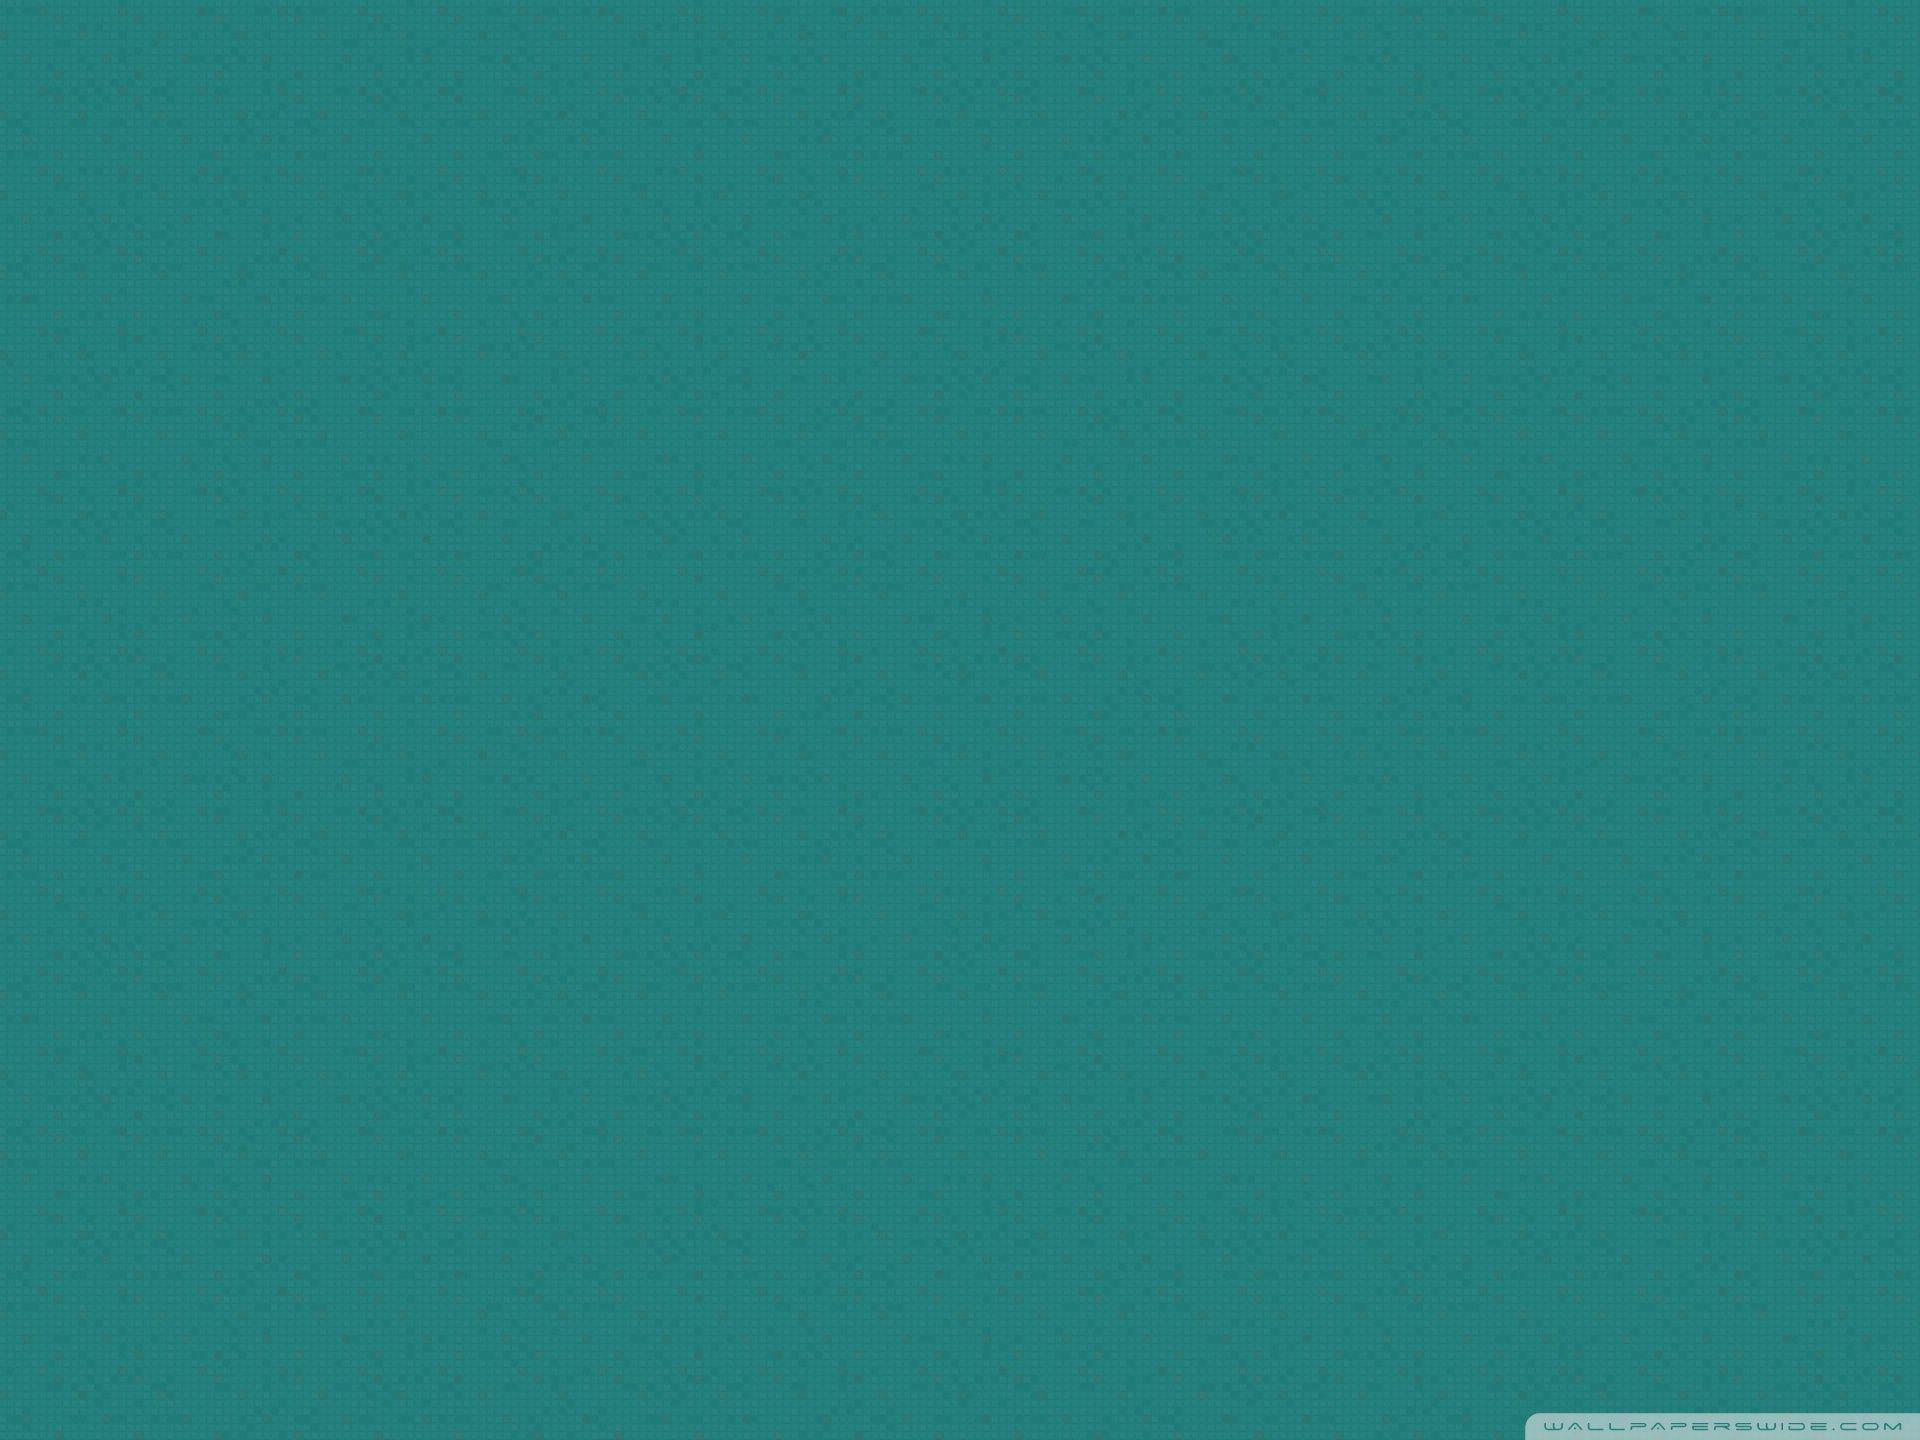 Pixel Art Turquoise HD desktop wallpaper, High Definition